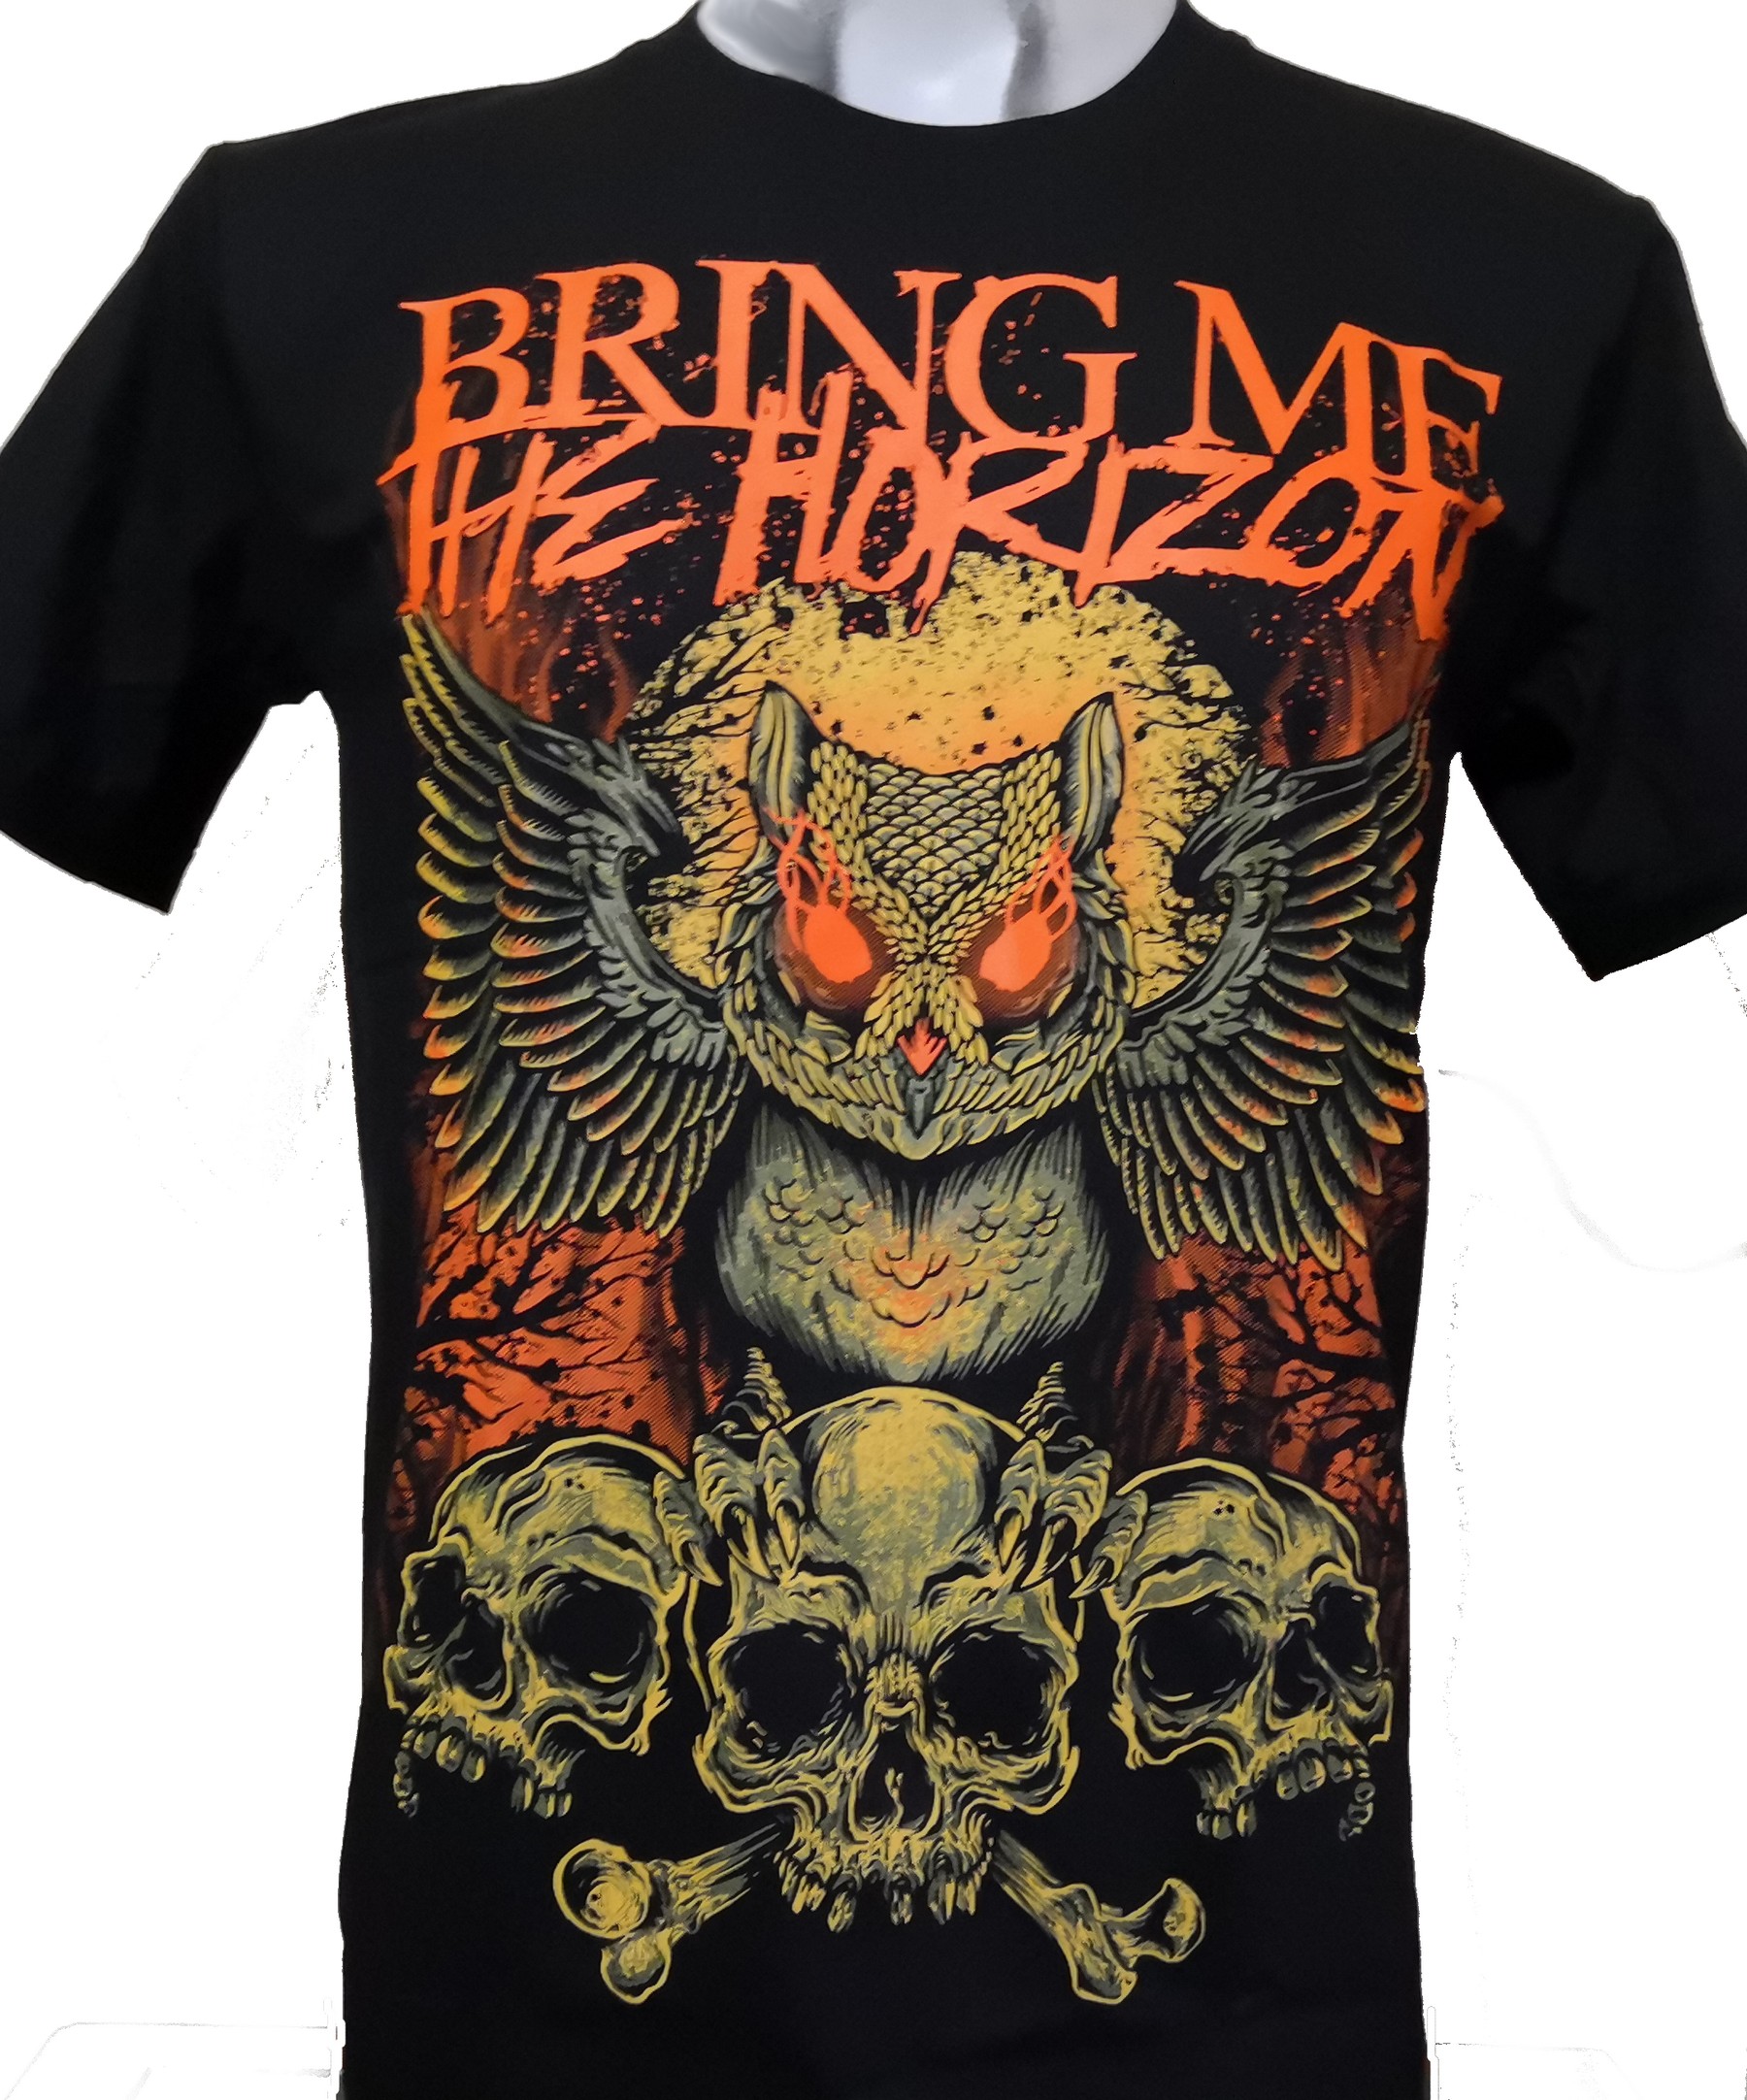 Bring Me The Horizon tshirt size L RoxxBKK